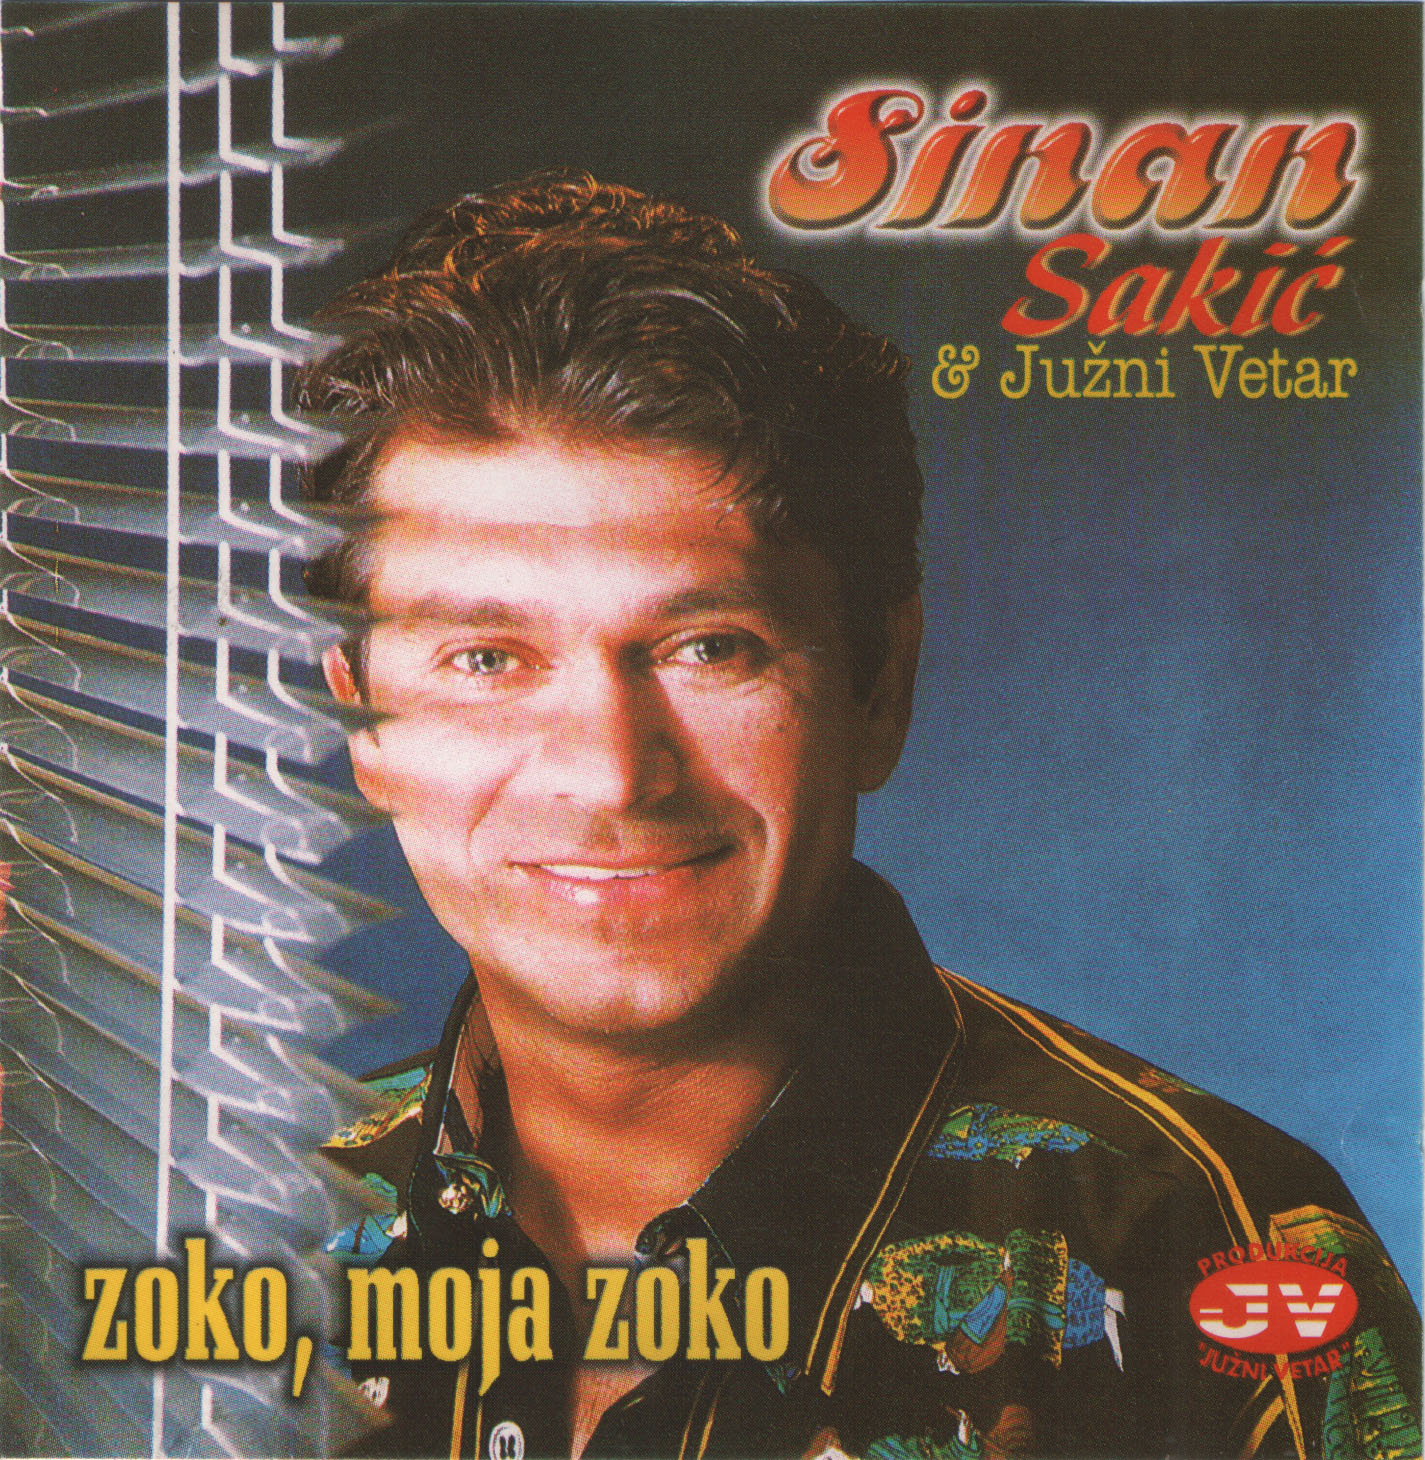 Sinan Sakic 1996 Prednja